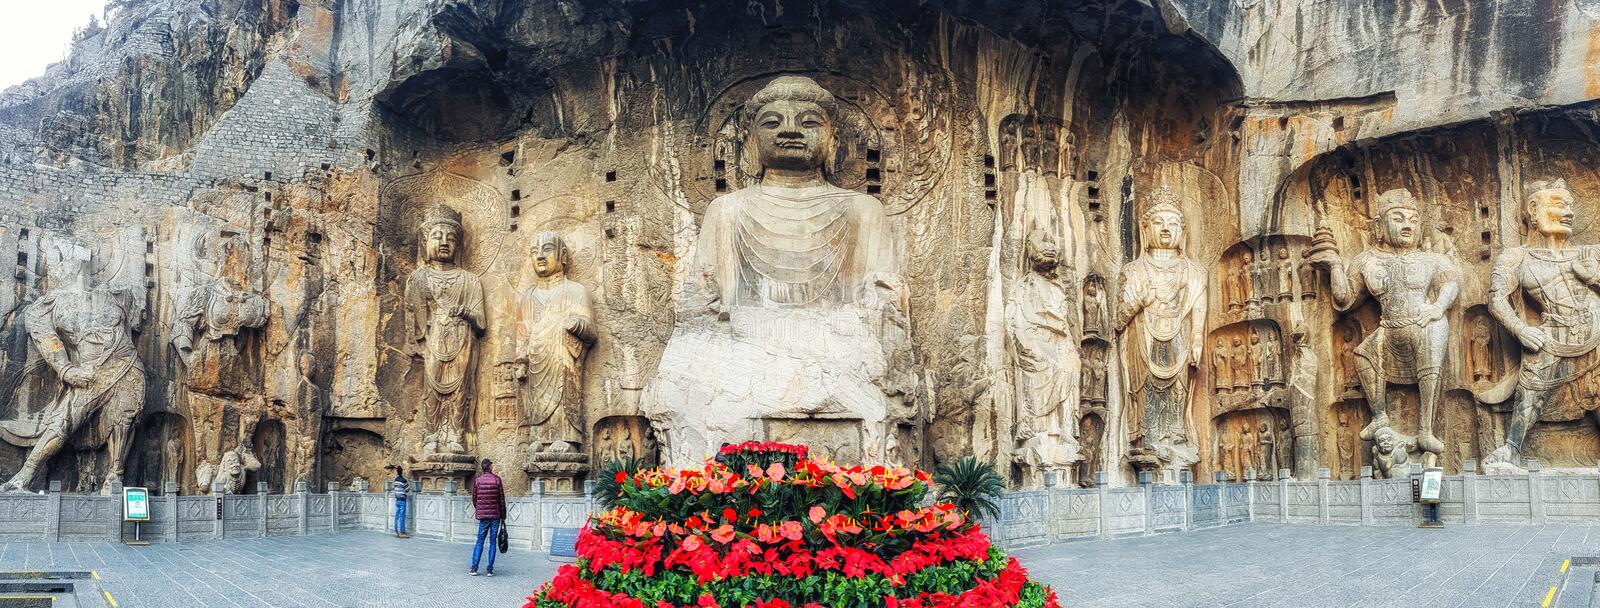 longmen-grottoes-luoyang-henan-china-one-o-hernan-december-s-four-buddhist-caves-art-treasure-houses-121472817.jpg